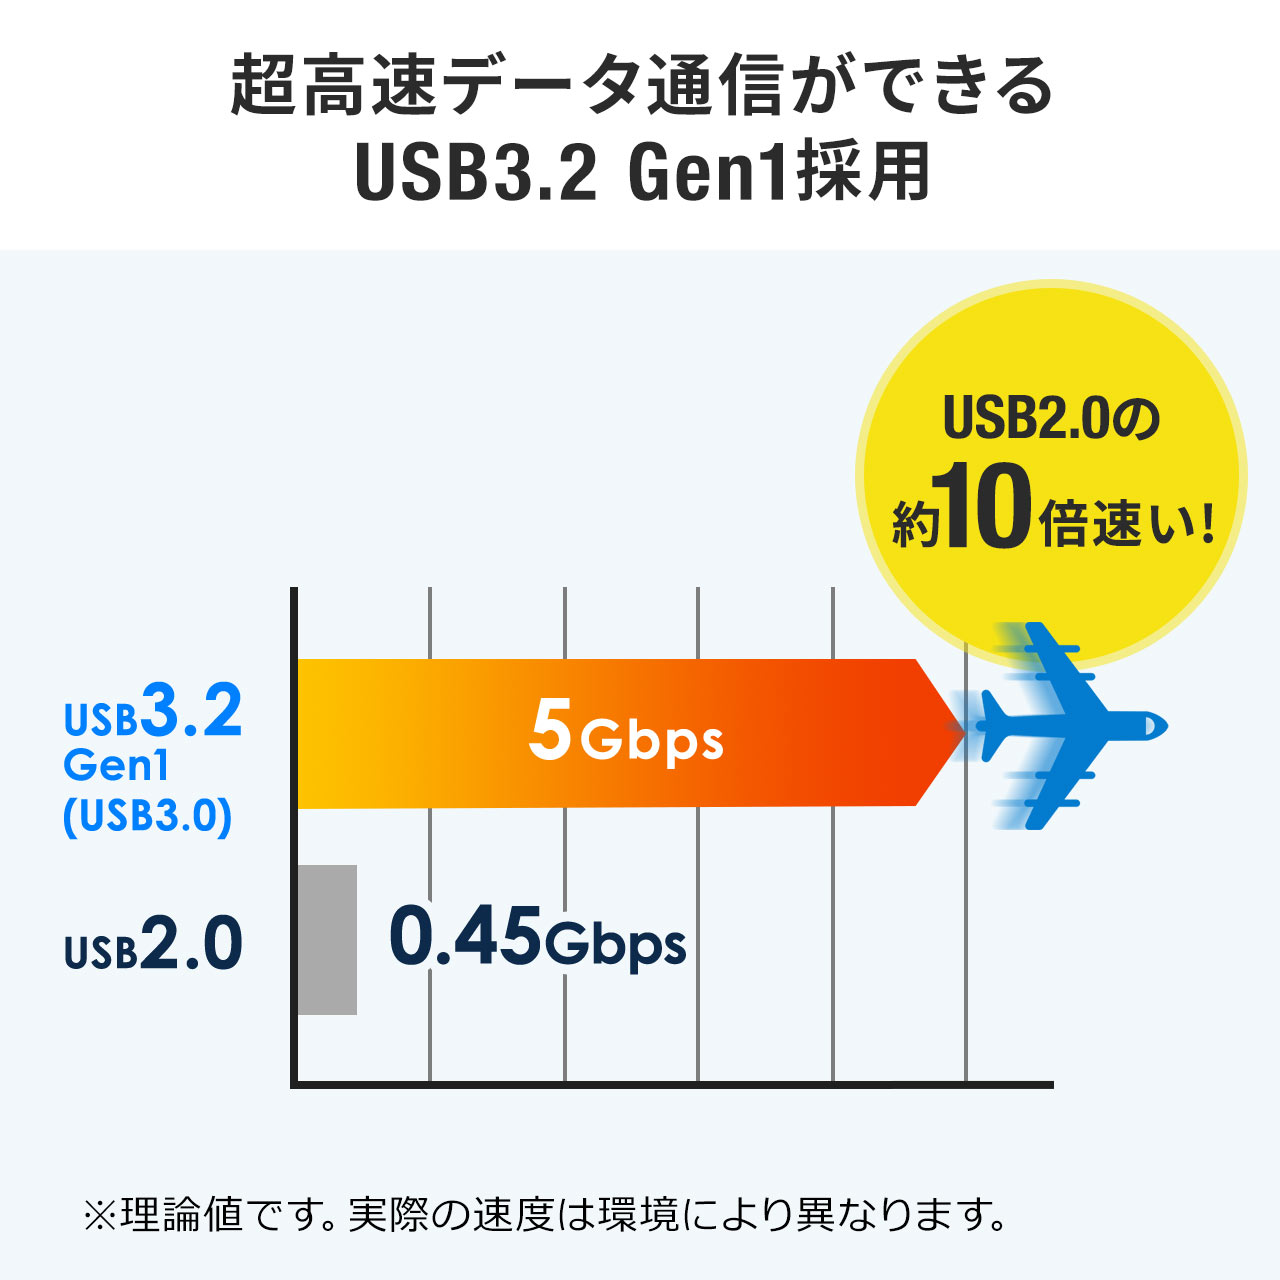 USBif[^]EXChE16GBEUSB3.2 Gen1EzCgEANZXvj 600-3USL16GW